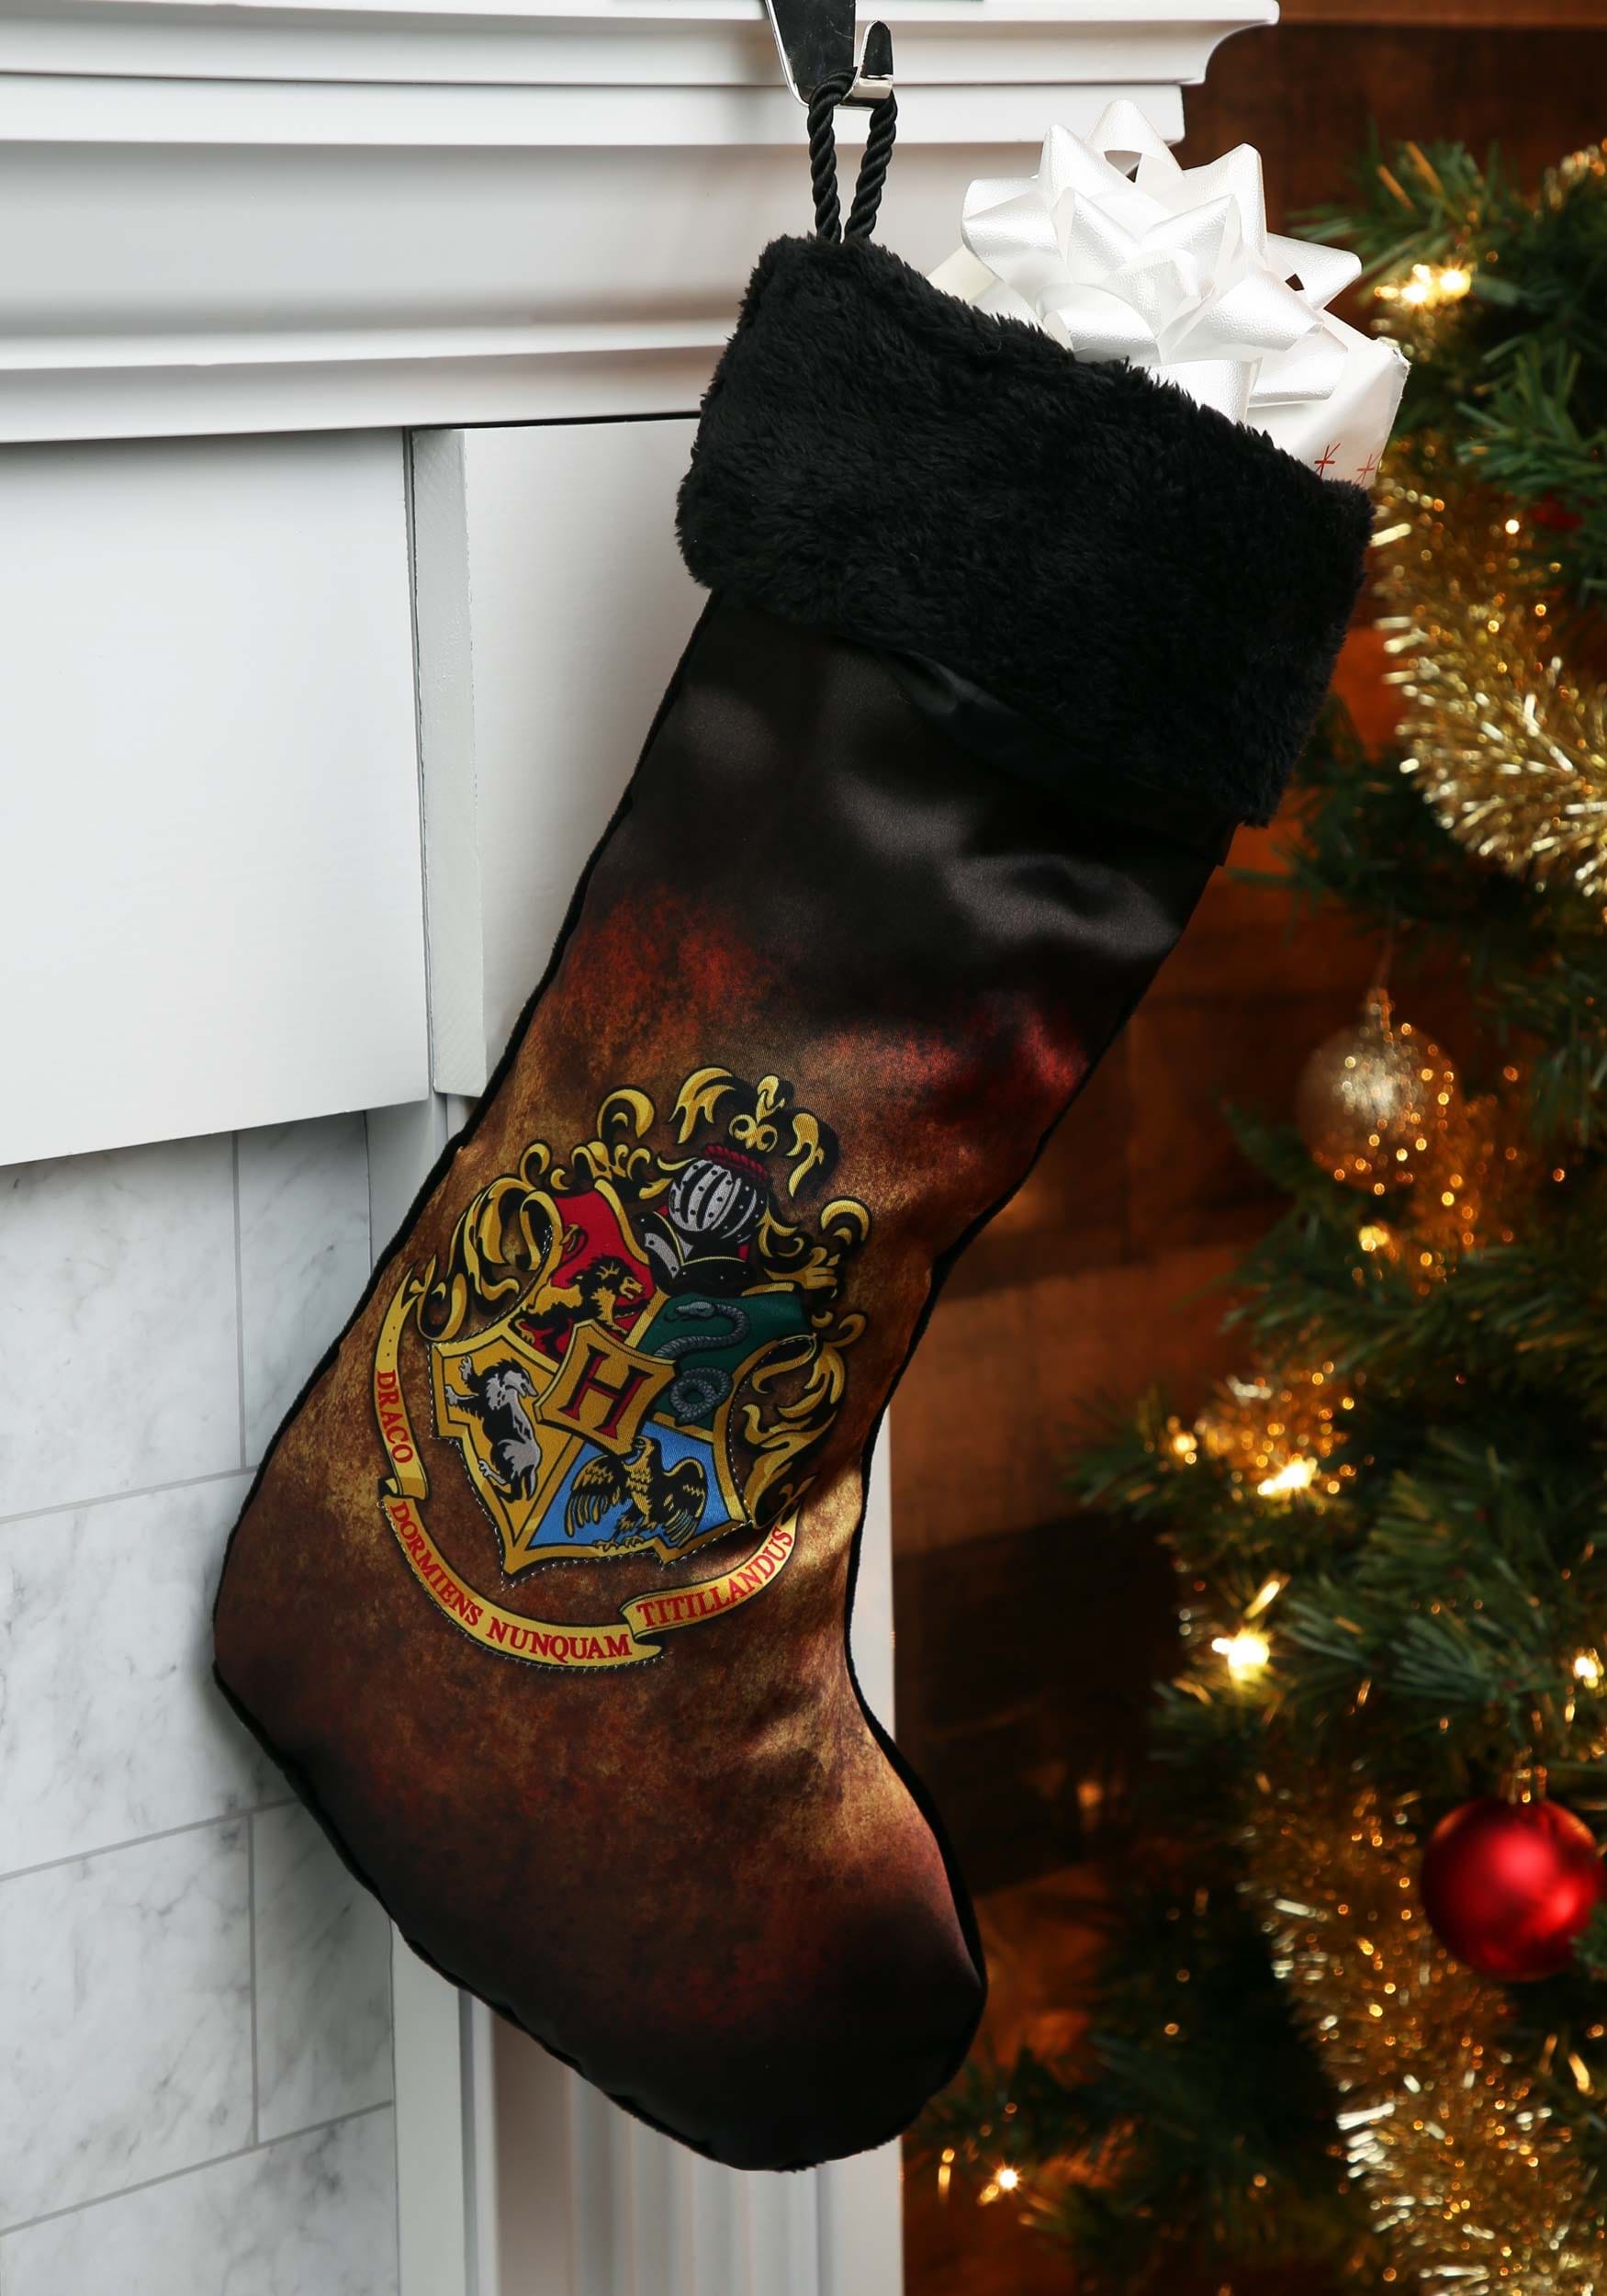 Holiday Decorating Kit, Create A Treat Harry Potter Hogwarts